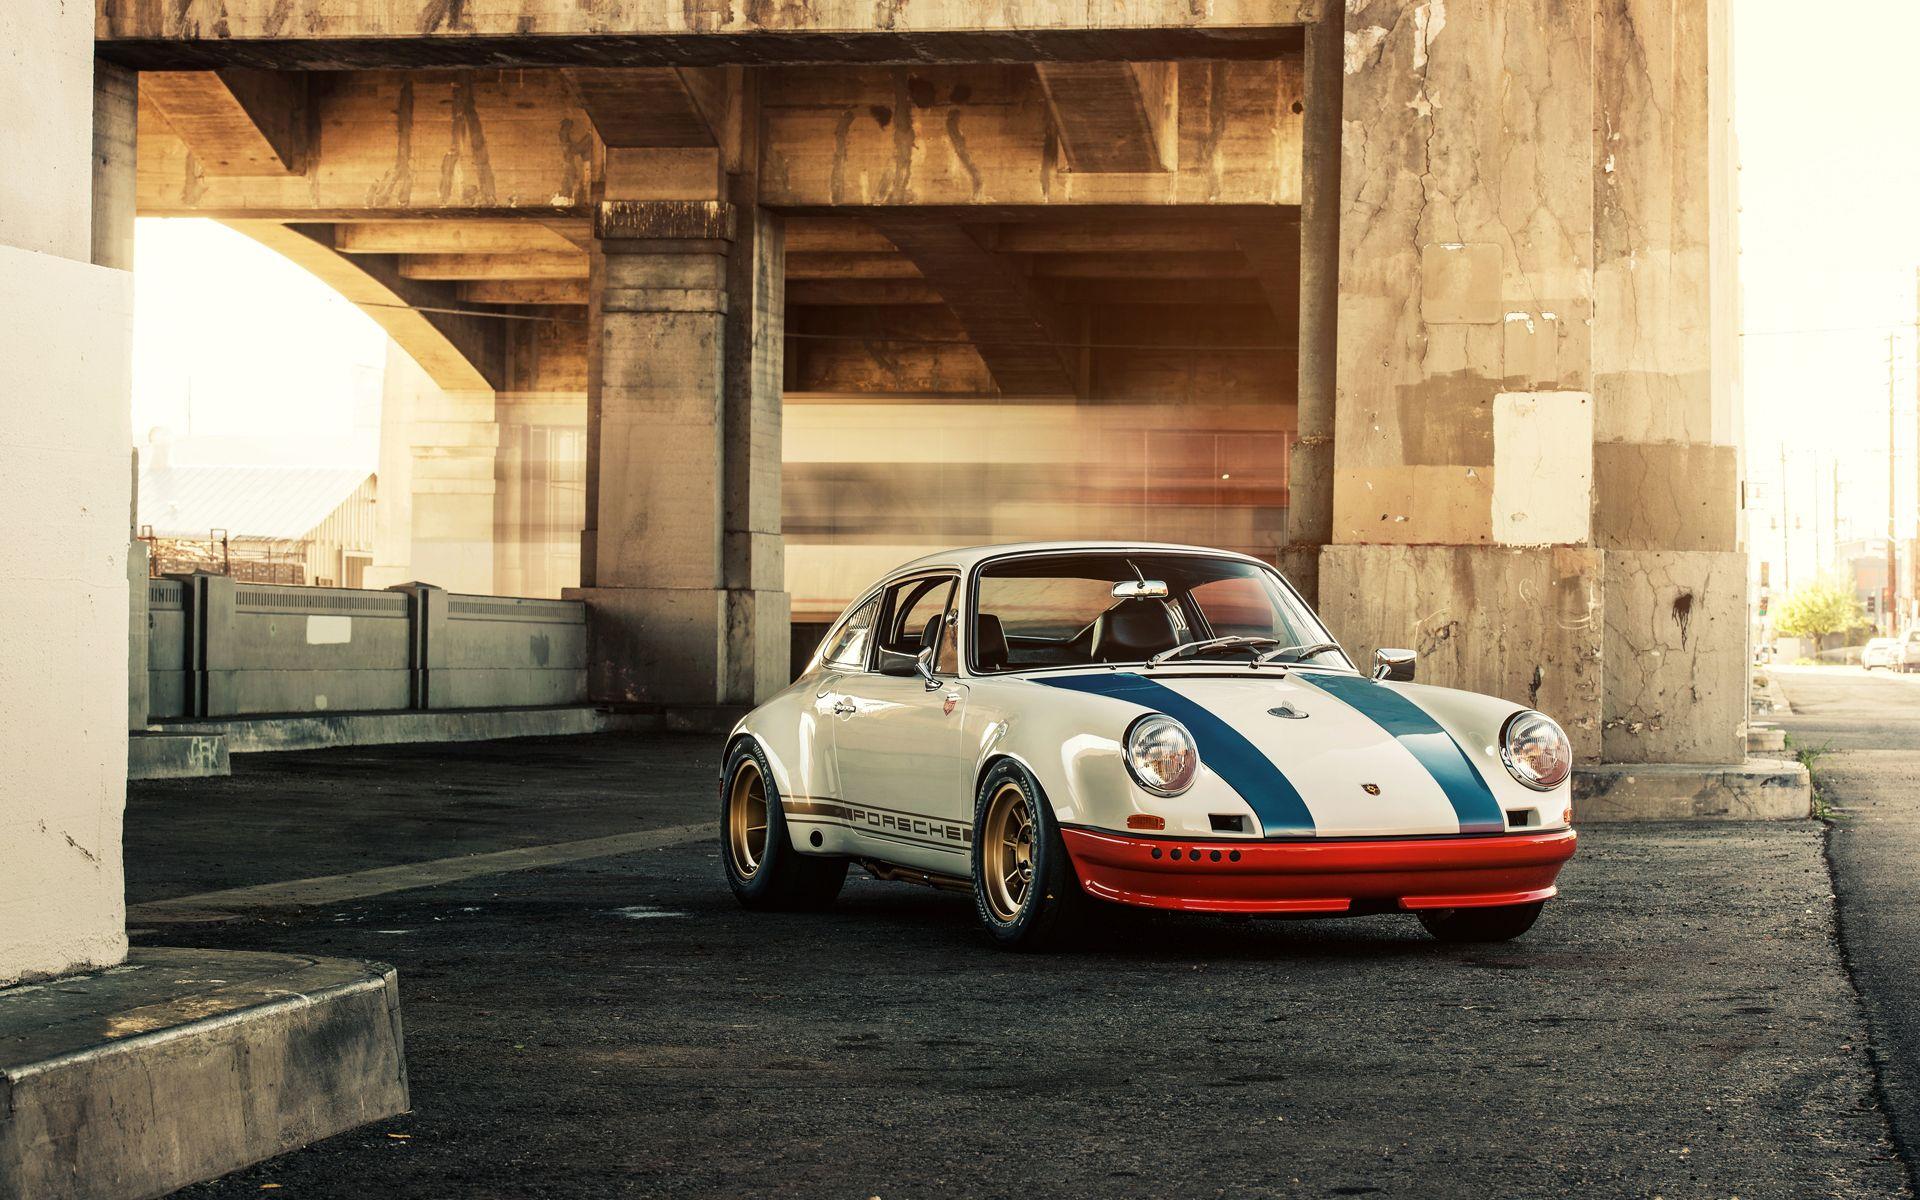 Classic Porsche Wallpapers - Top Free Classic Porsche ...